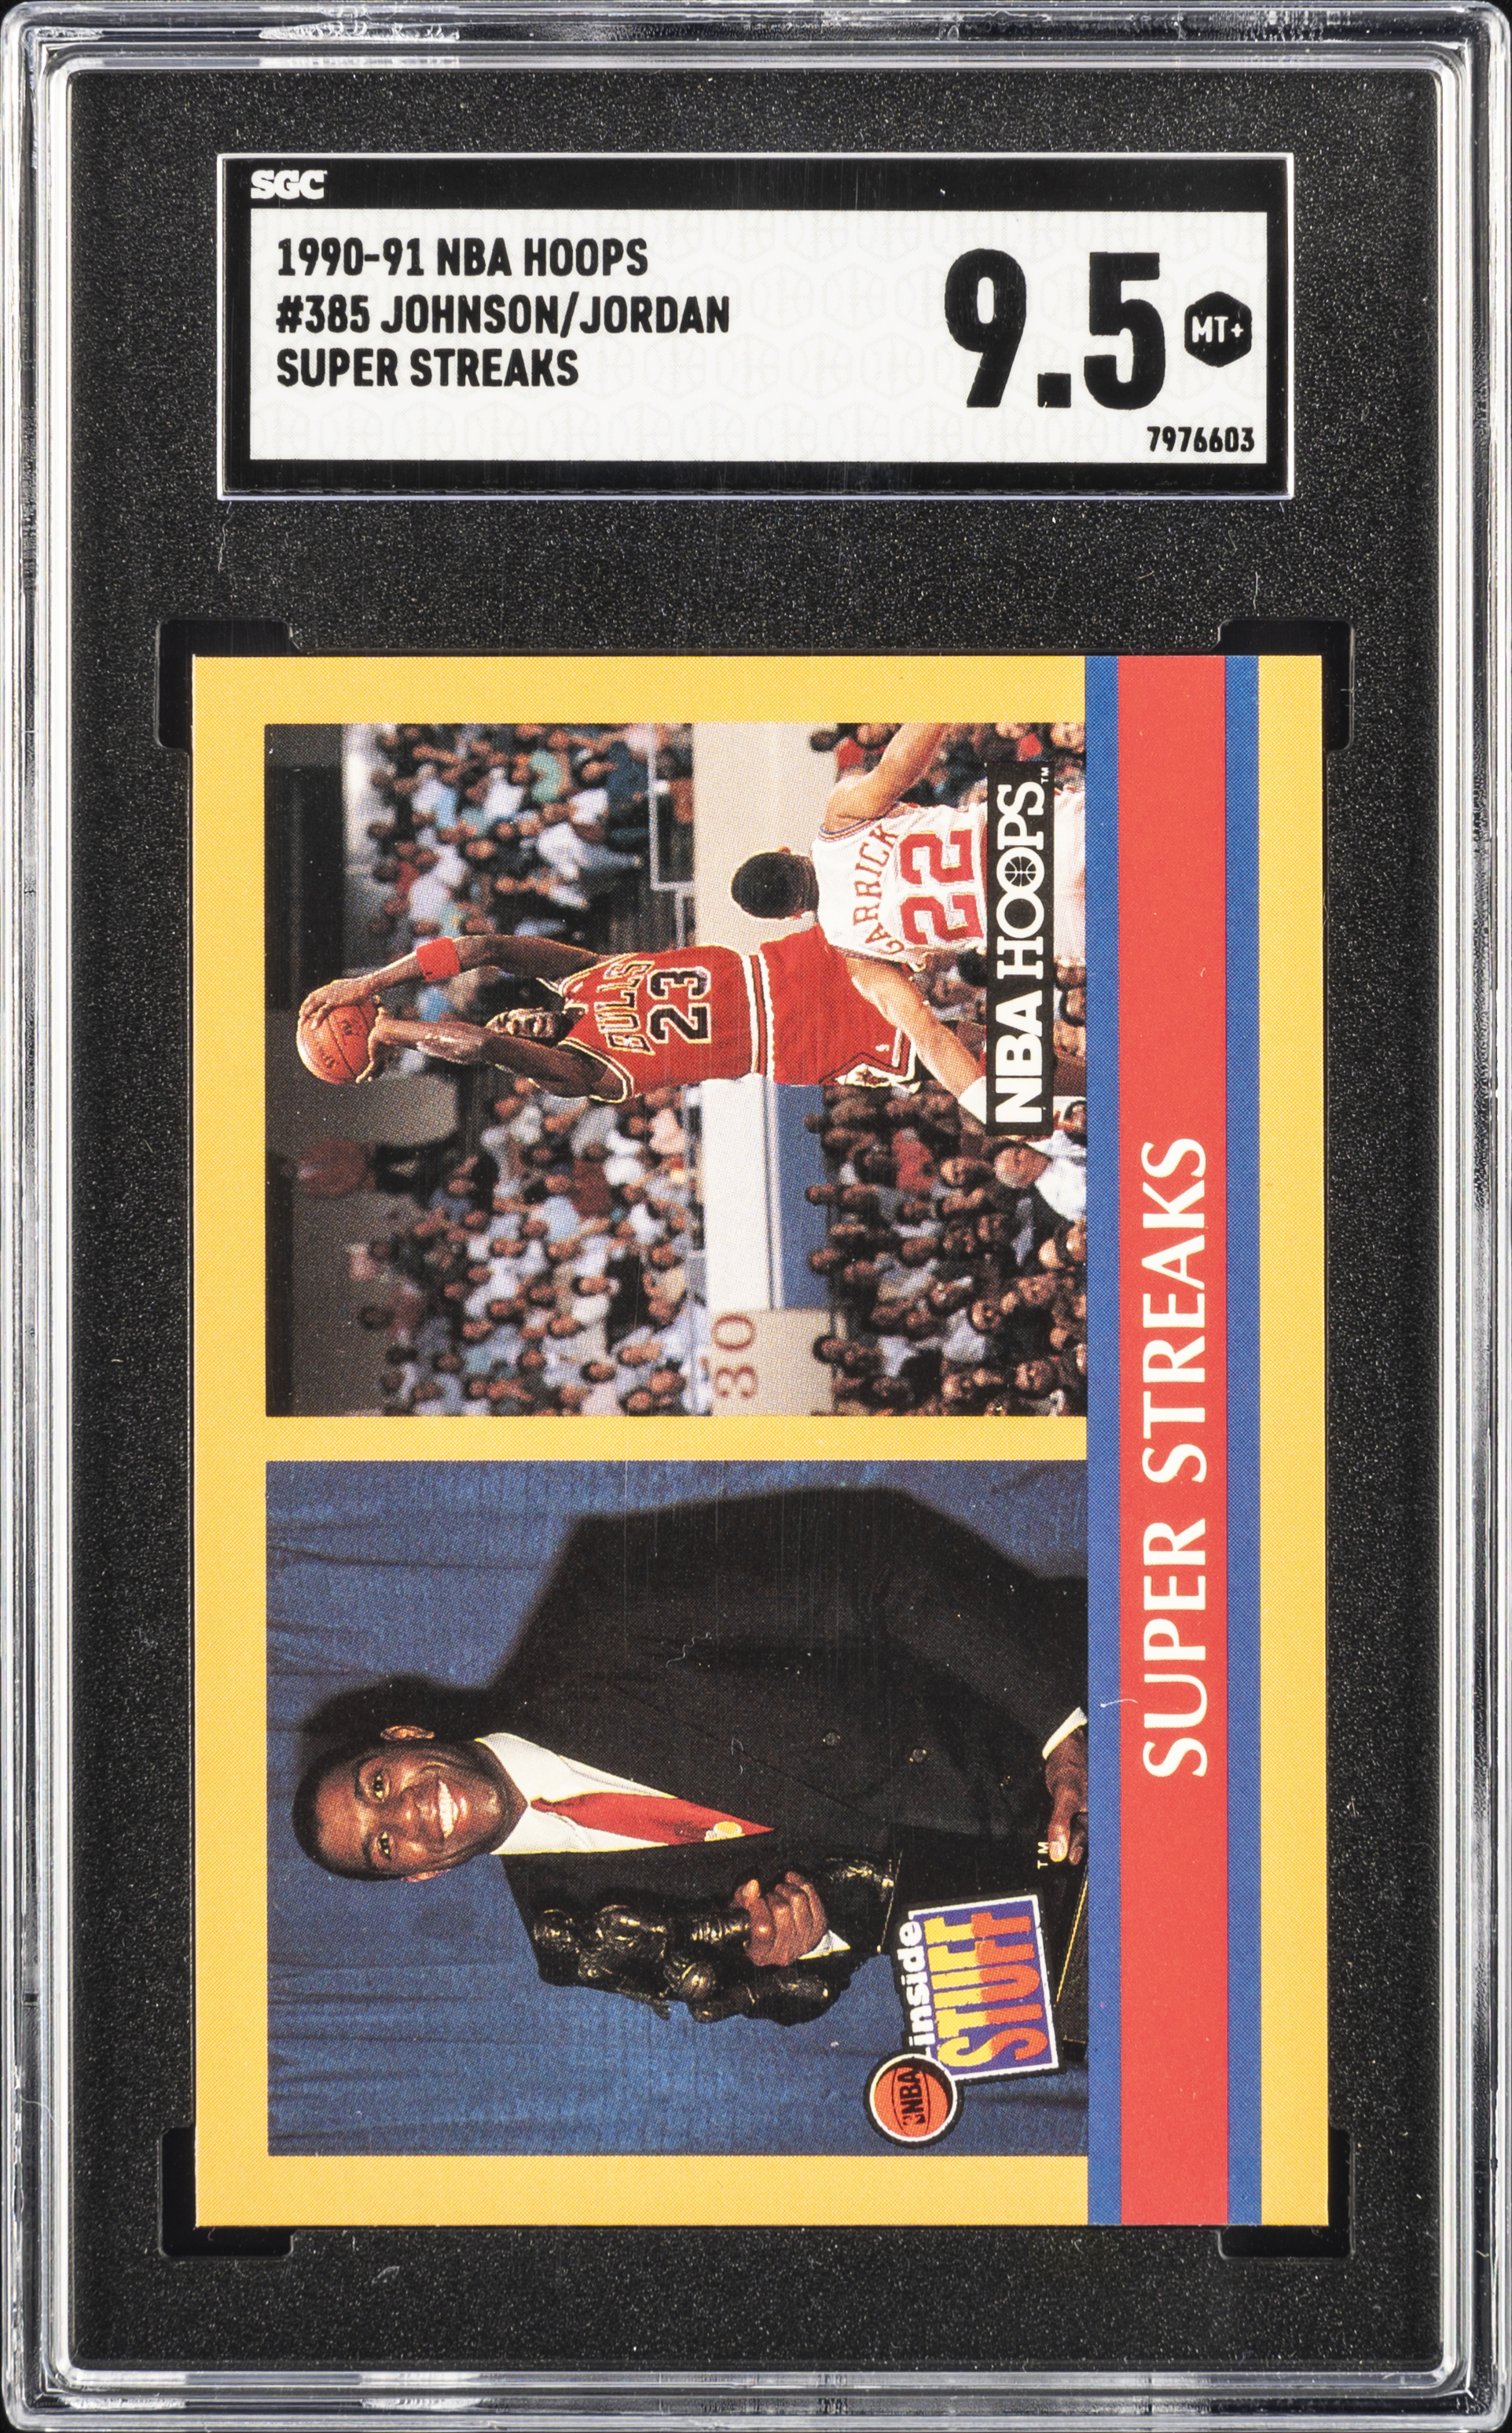 1990-91 Hoops Super Streaks #385 Magic Johnson/Michael Jordan – SGC MT+ 9.5